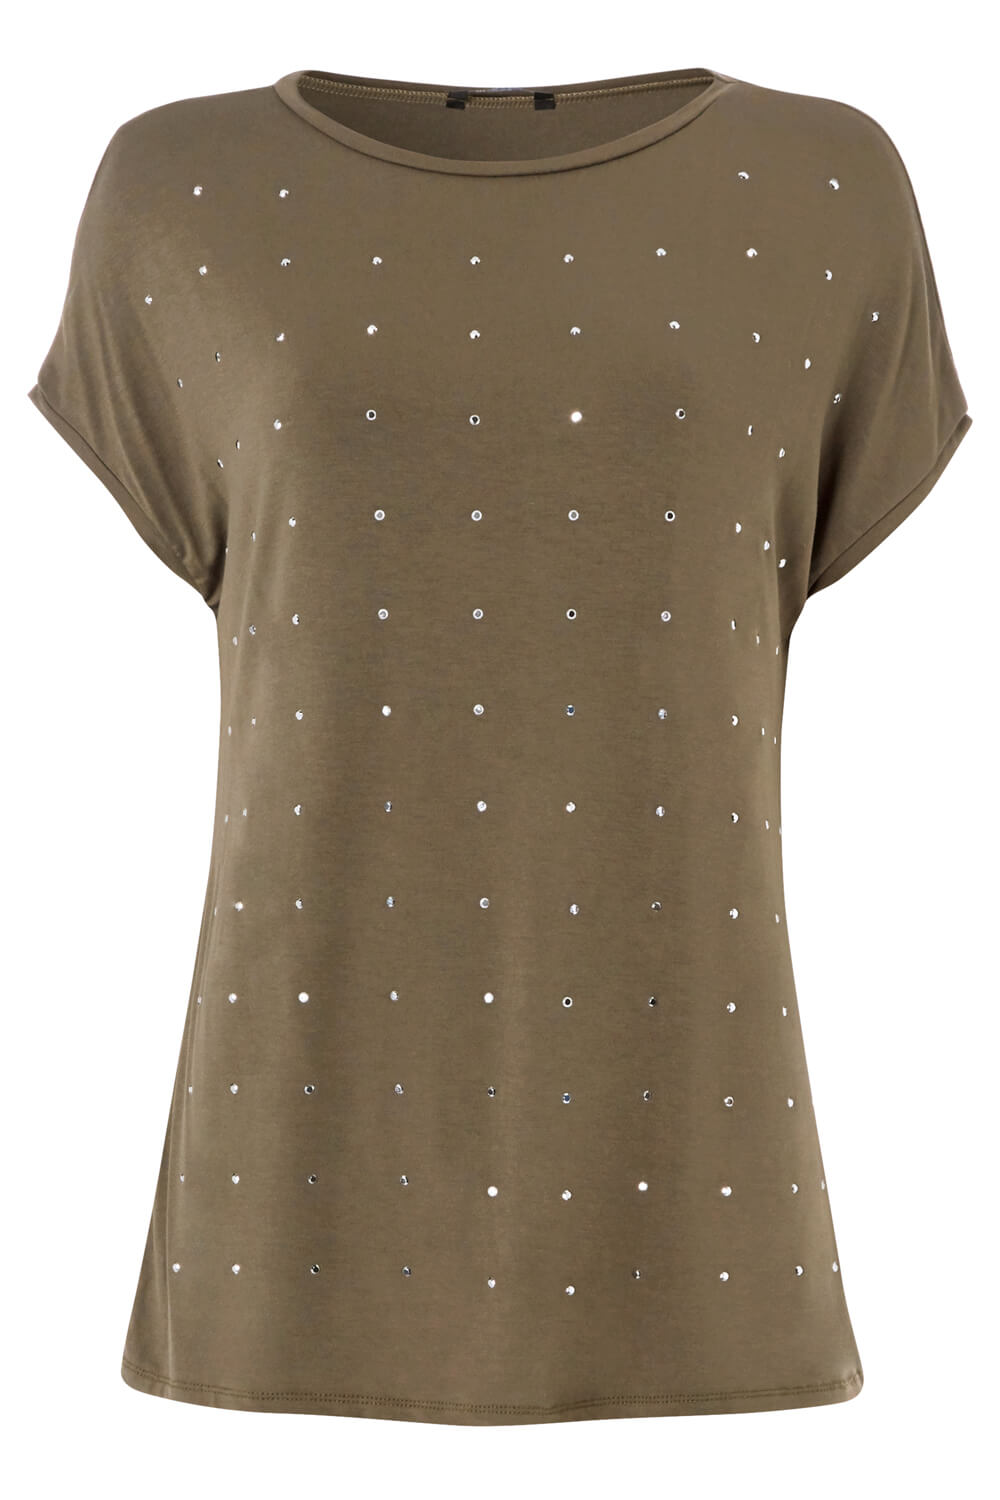 Stud Embellished T-Shirt Top in Khaki - Roman Originals UK